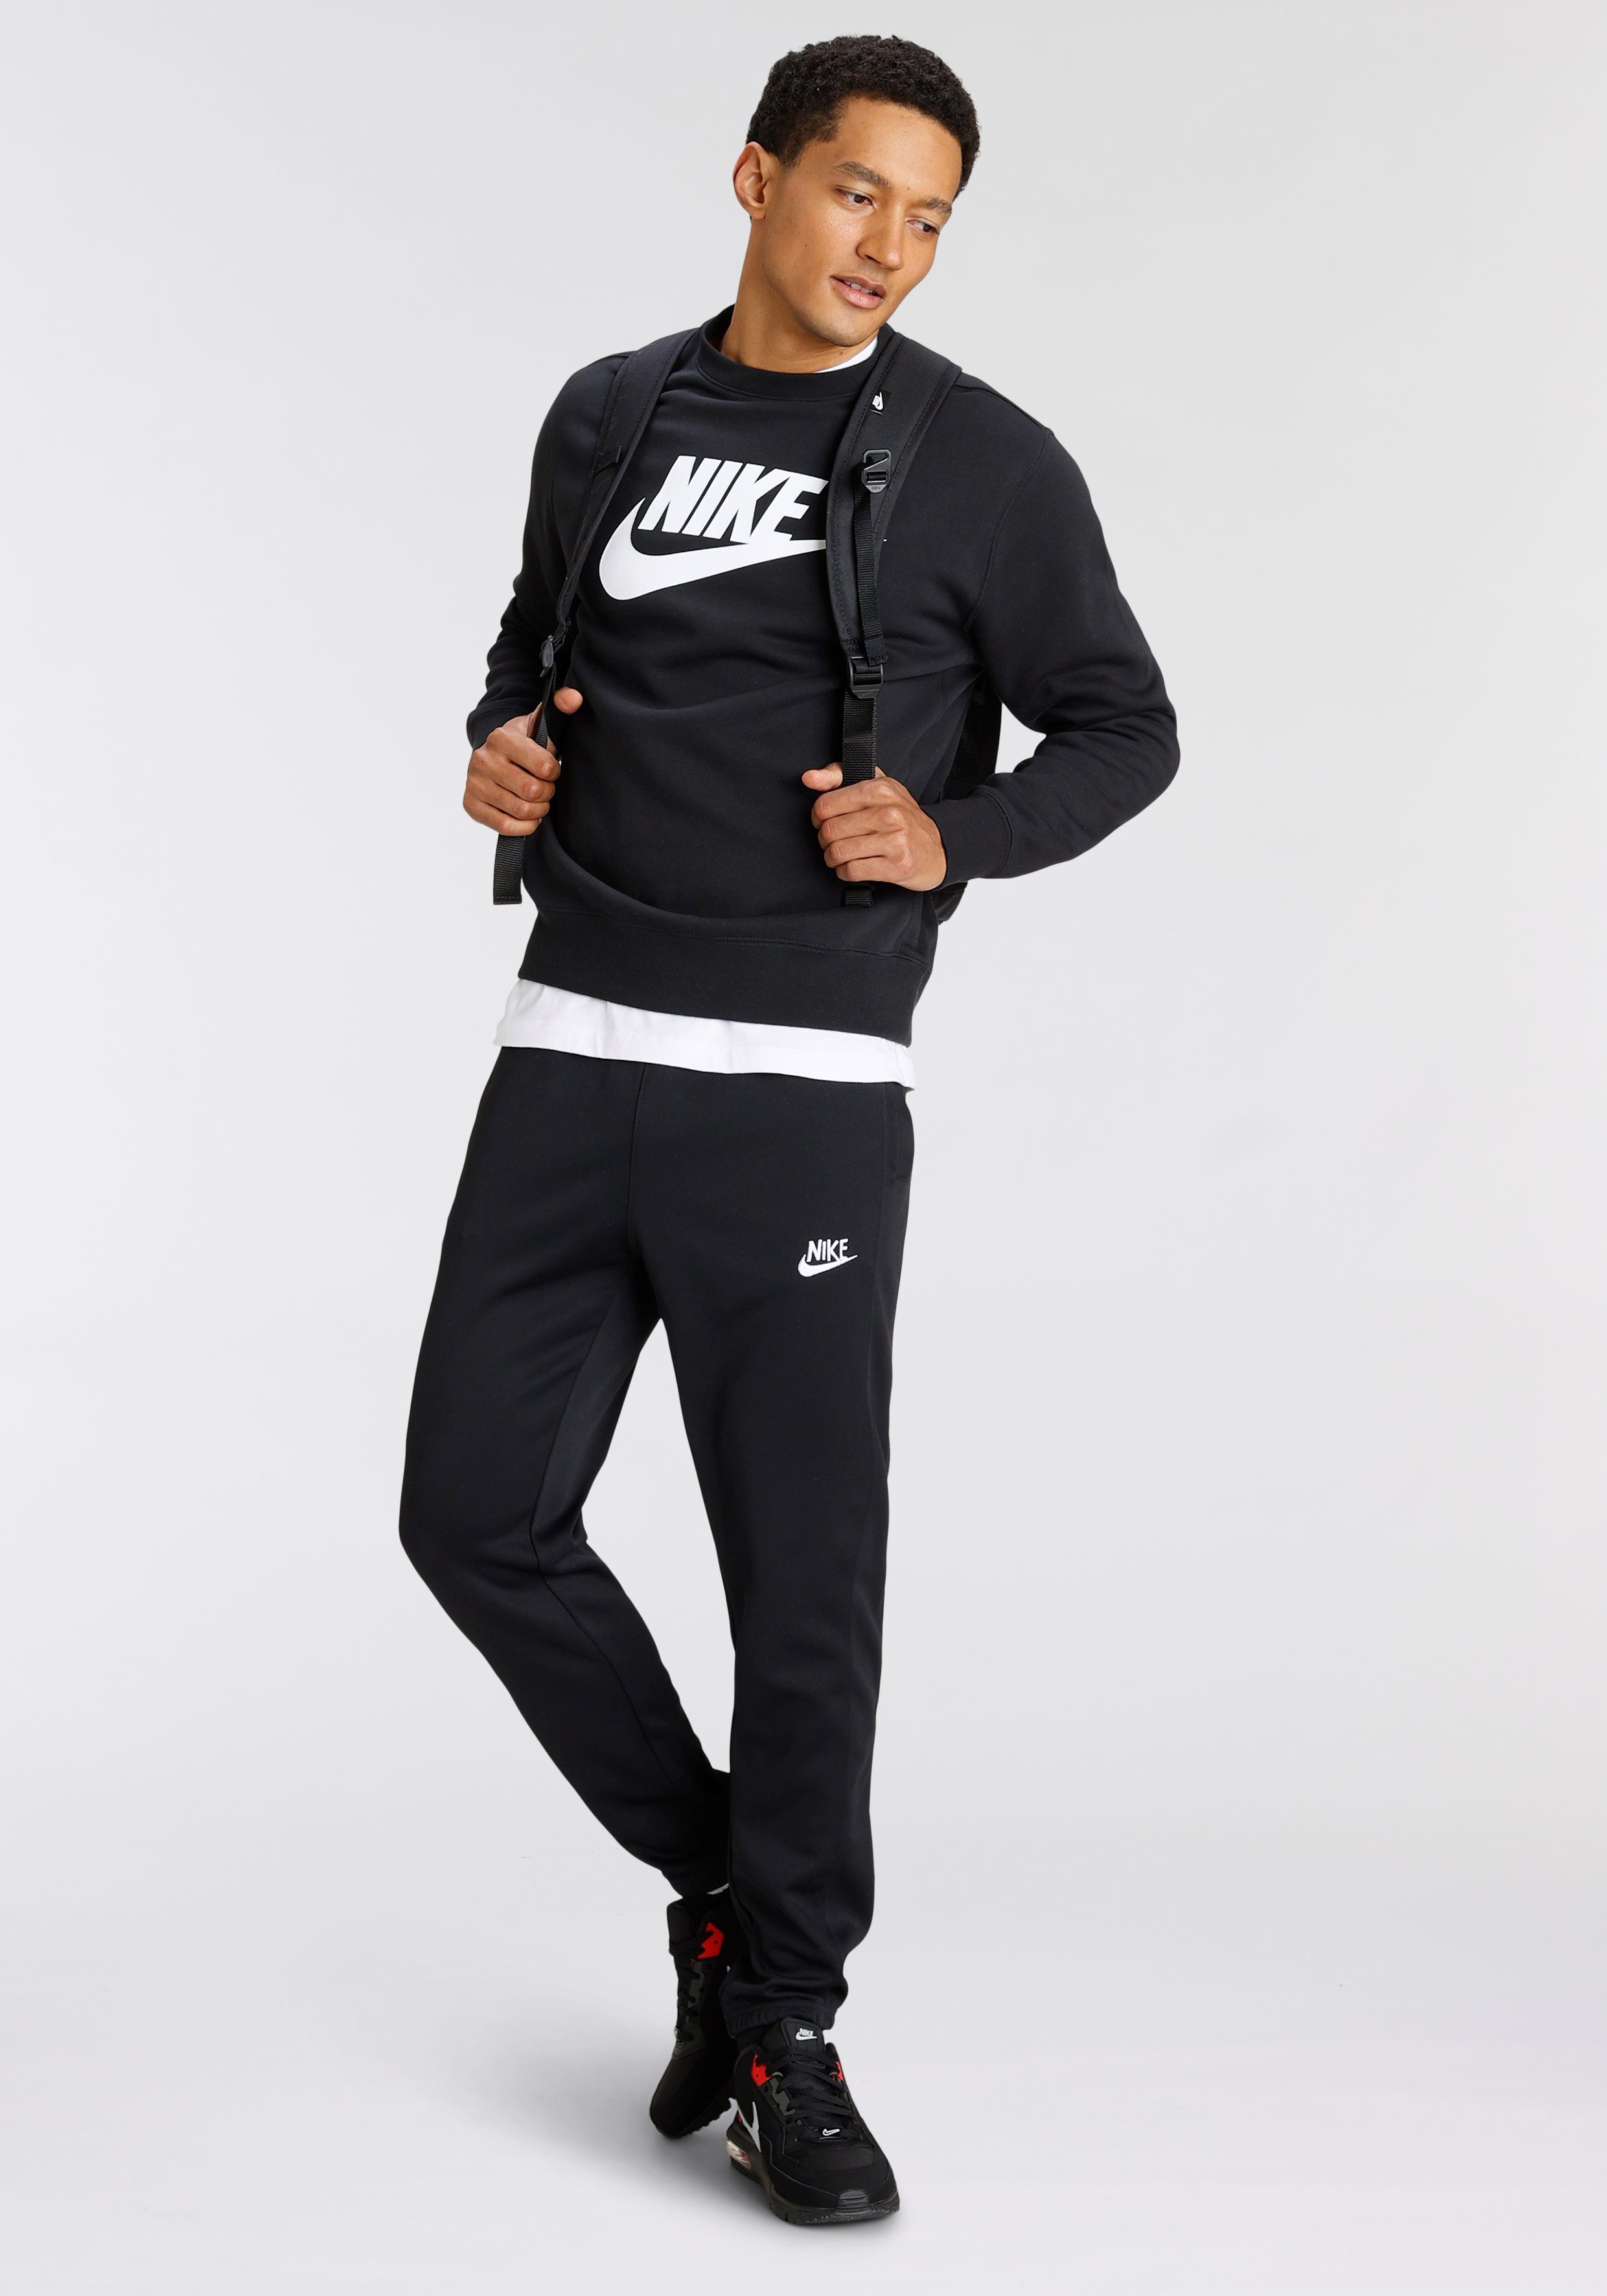 Club BLACK Fleece Graphic Sportswear Crew Men's Sweatshirt Nike